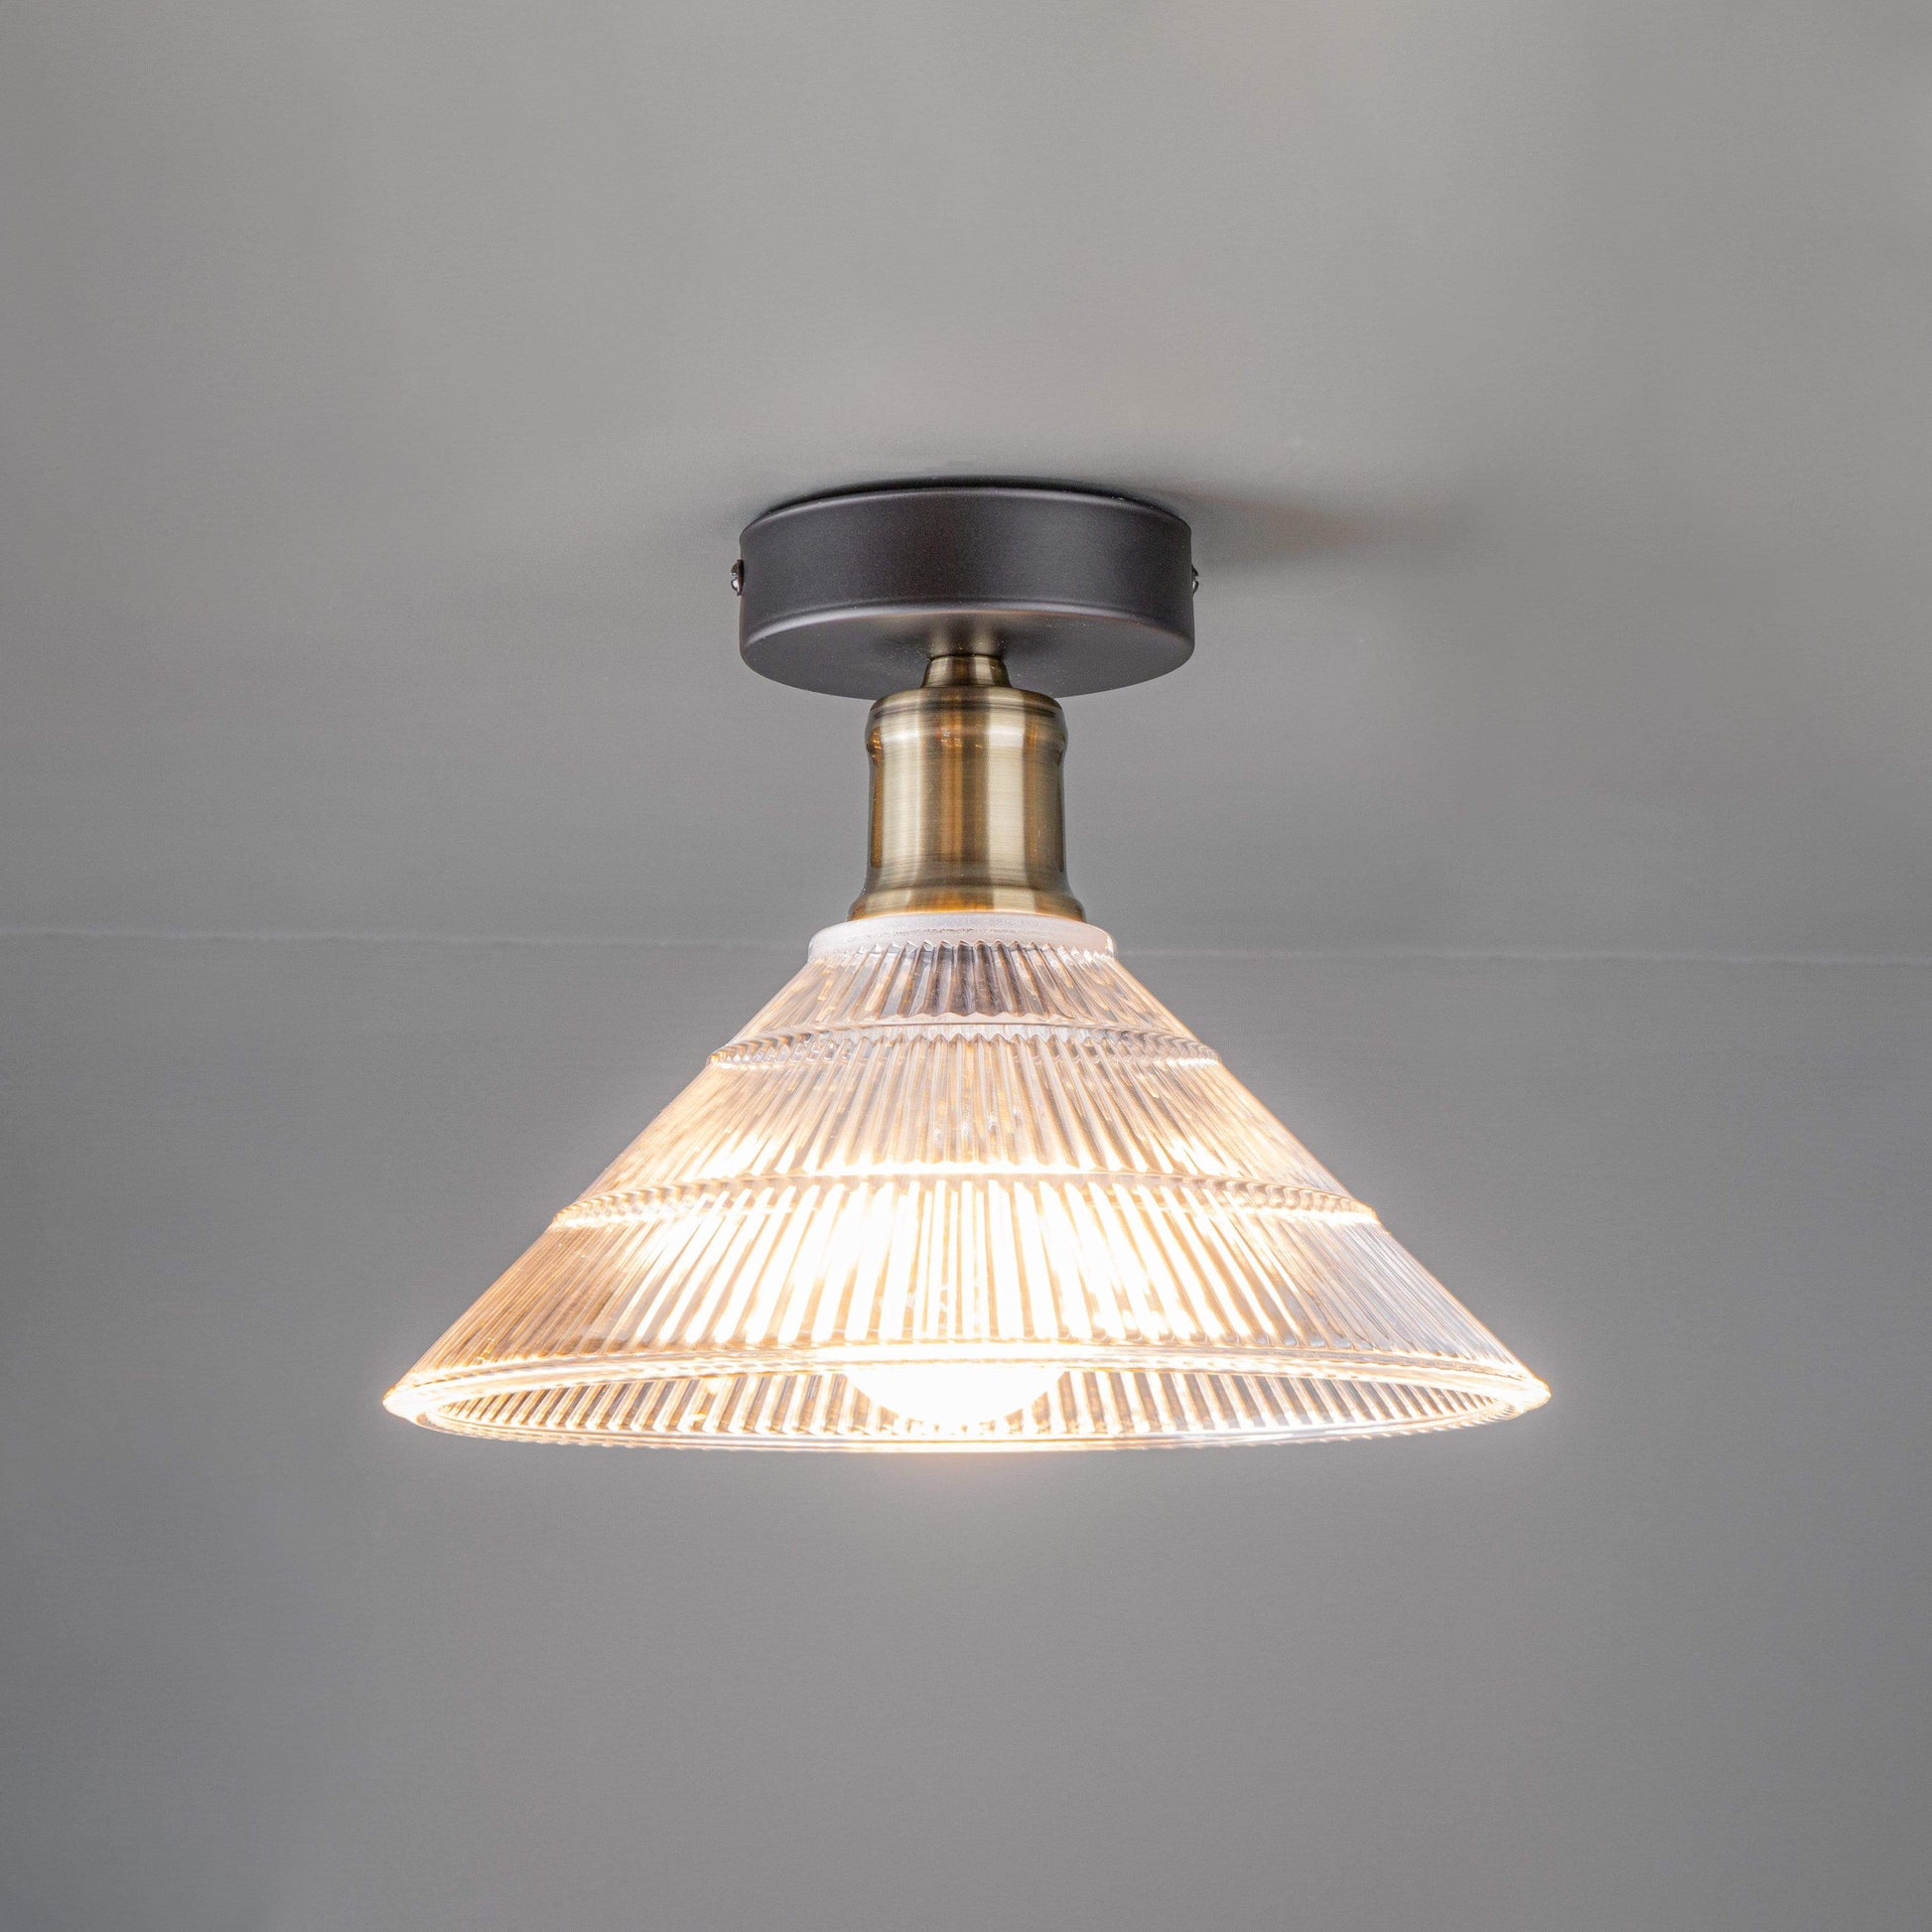 Lights  -  1 Light Flush Ceiling Light In Antique Brass With Glass Shade Ceiling light  -  50155801